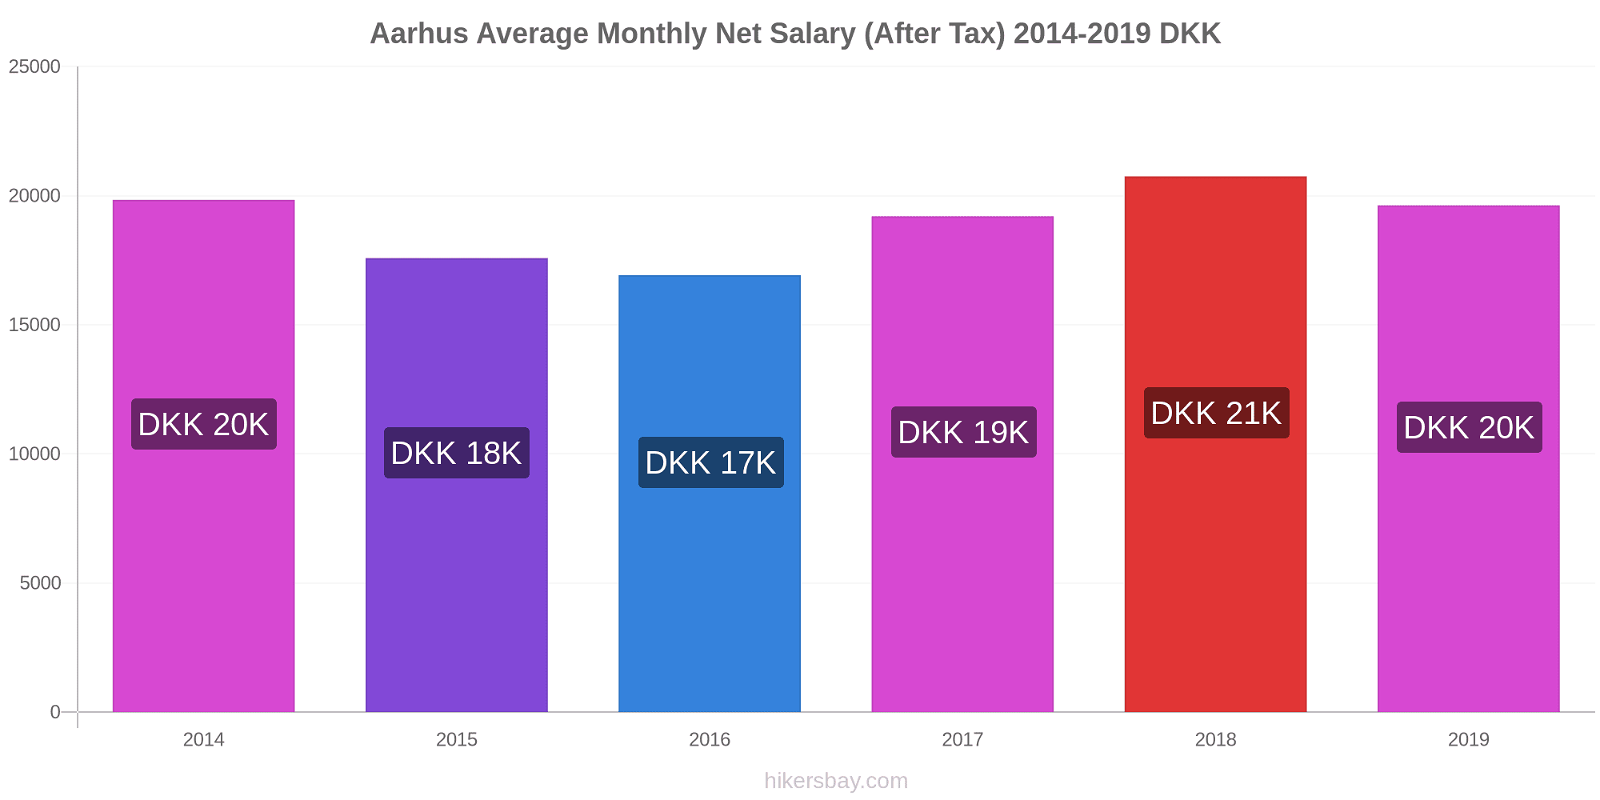 Aarhus price changes Average Monthly Net Salary (After Tax) hikersbay.com